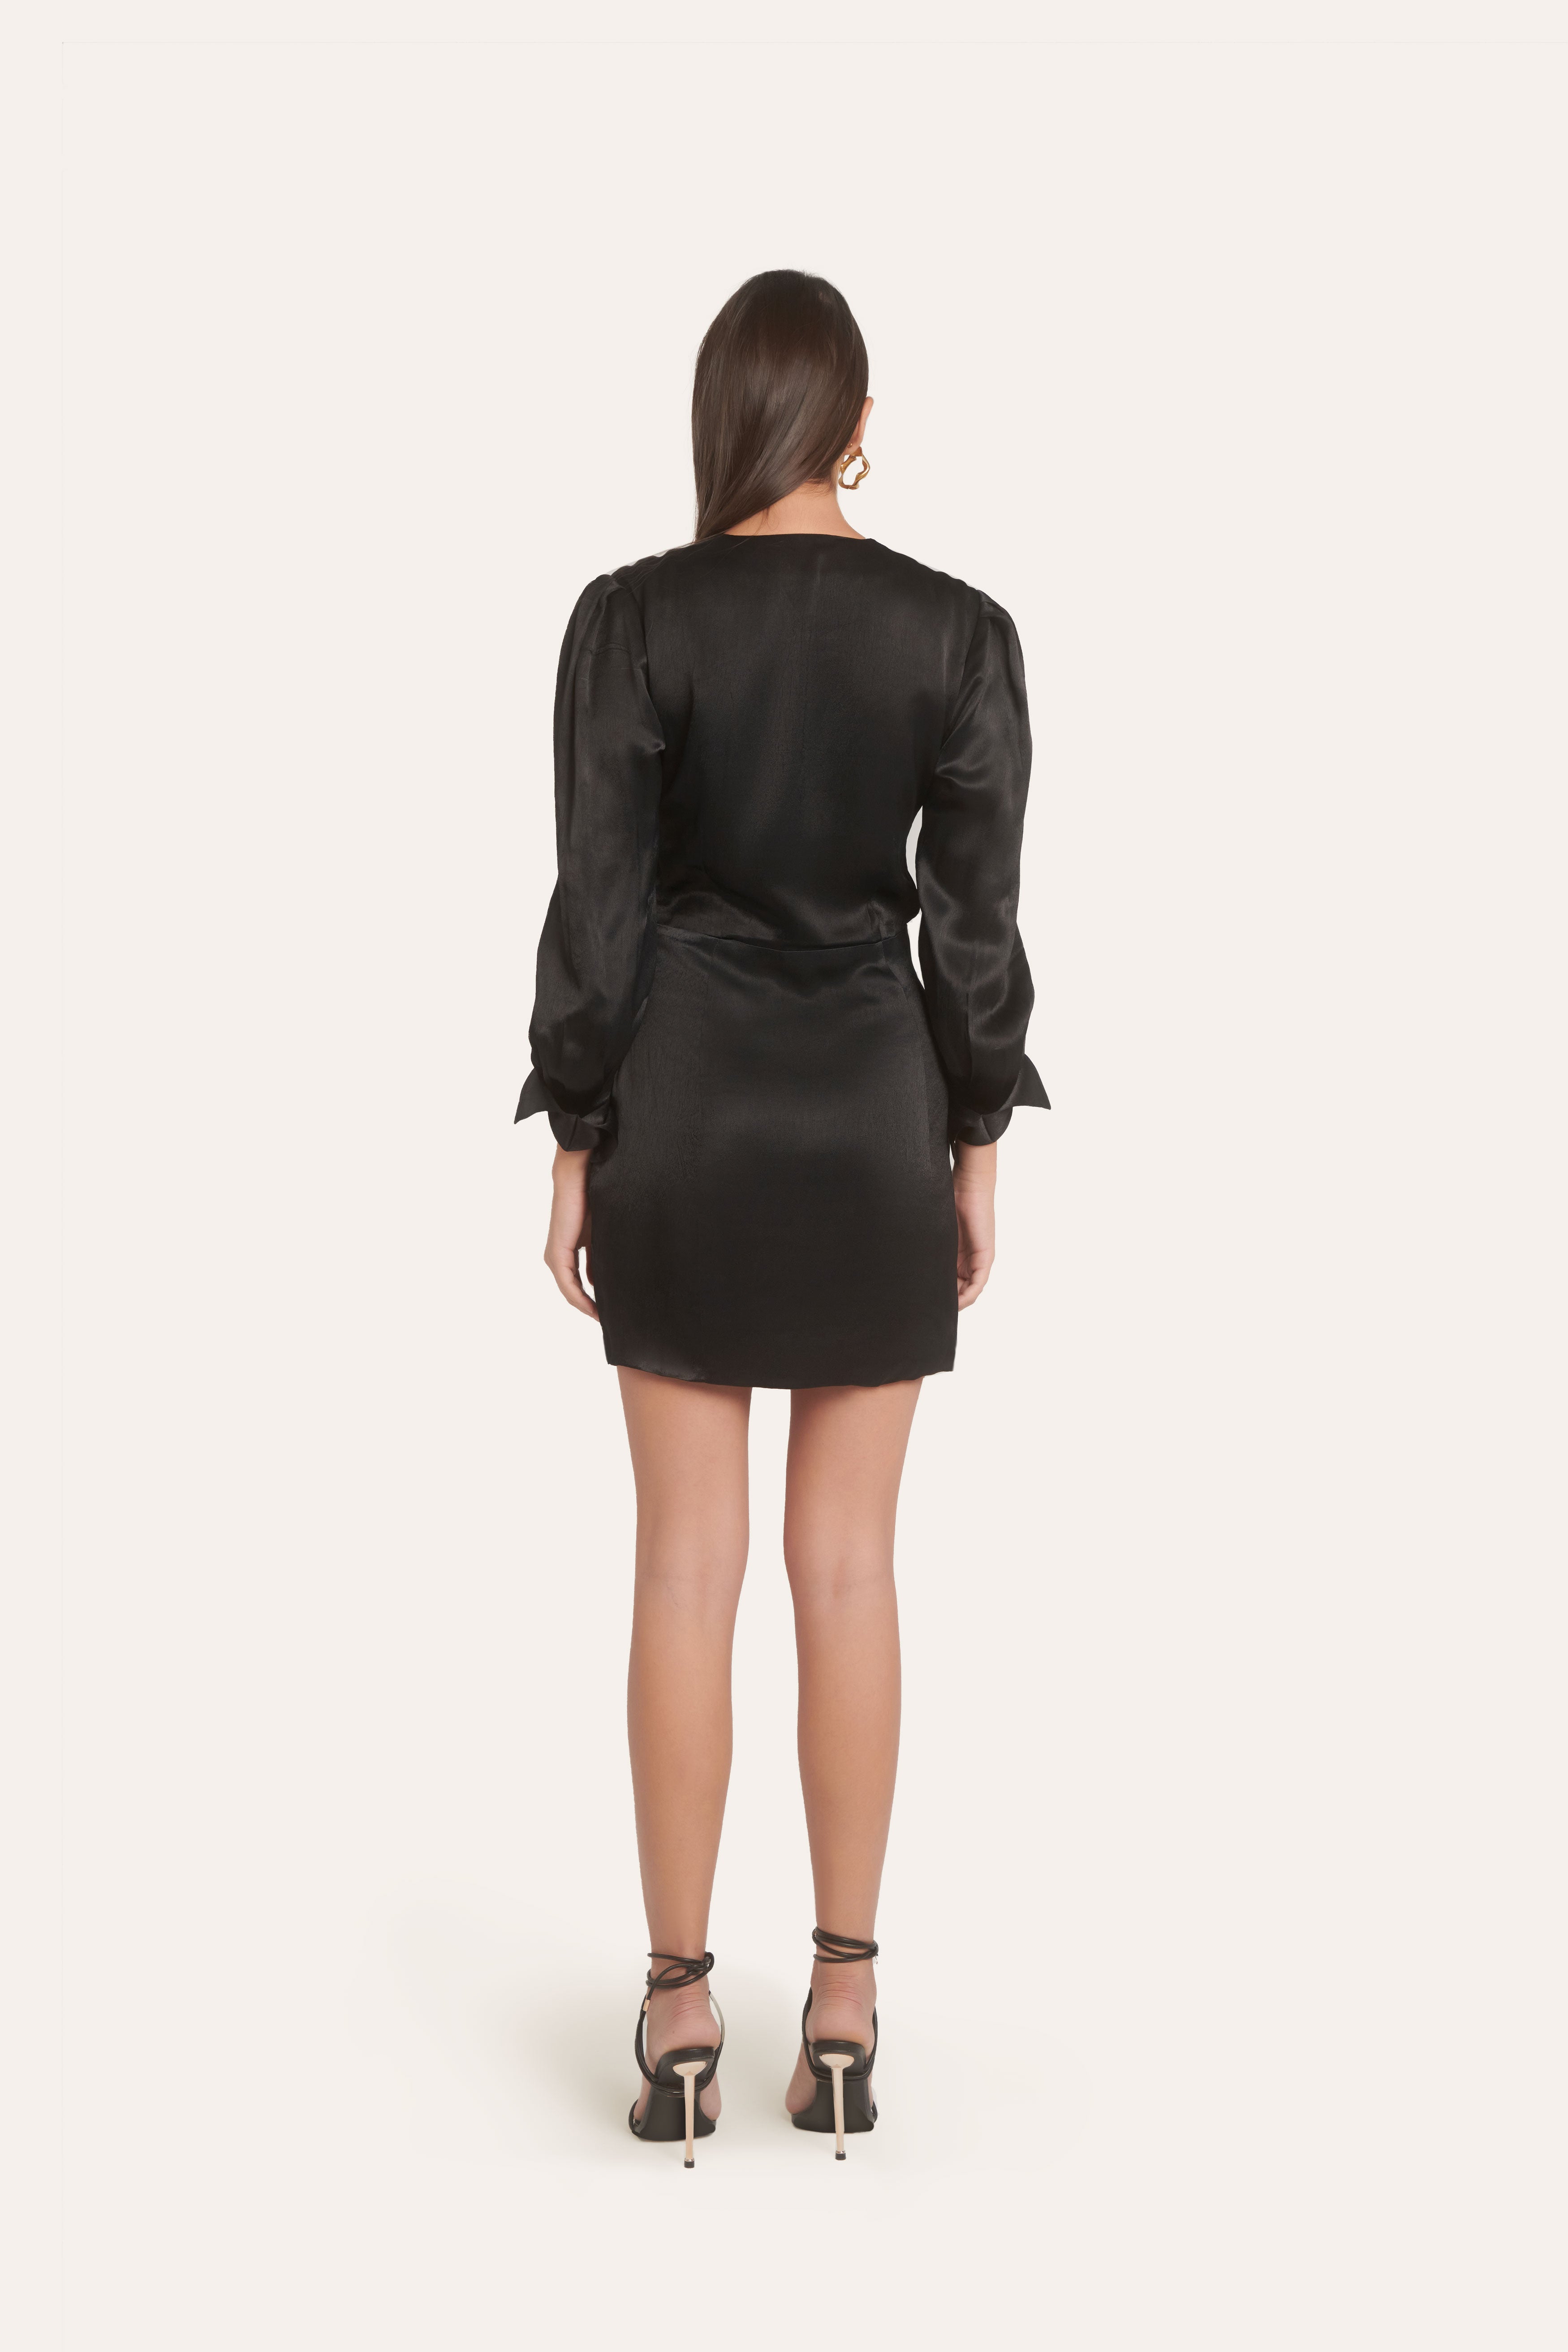 Mini black v neck dress with slits along the thigh